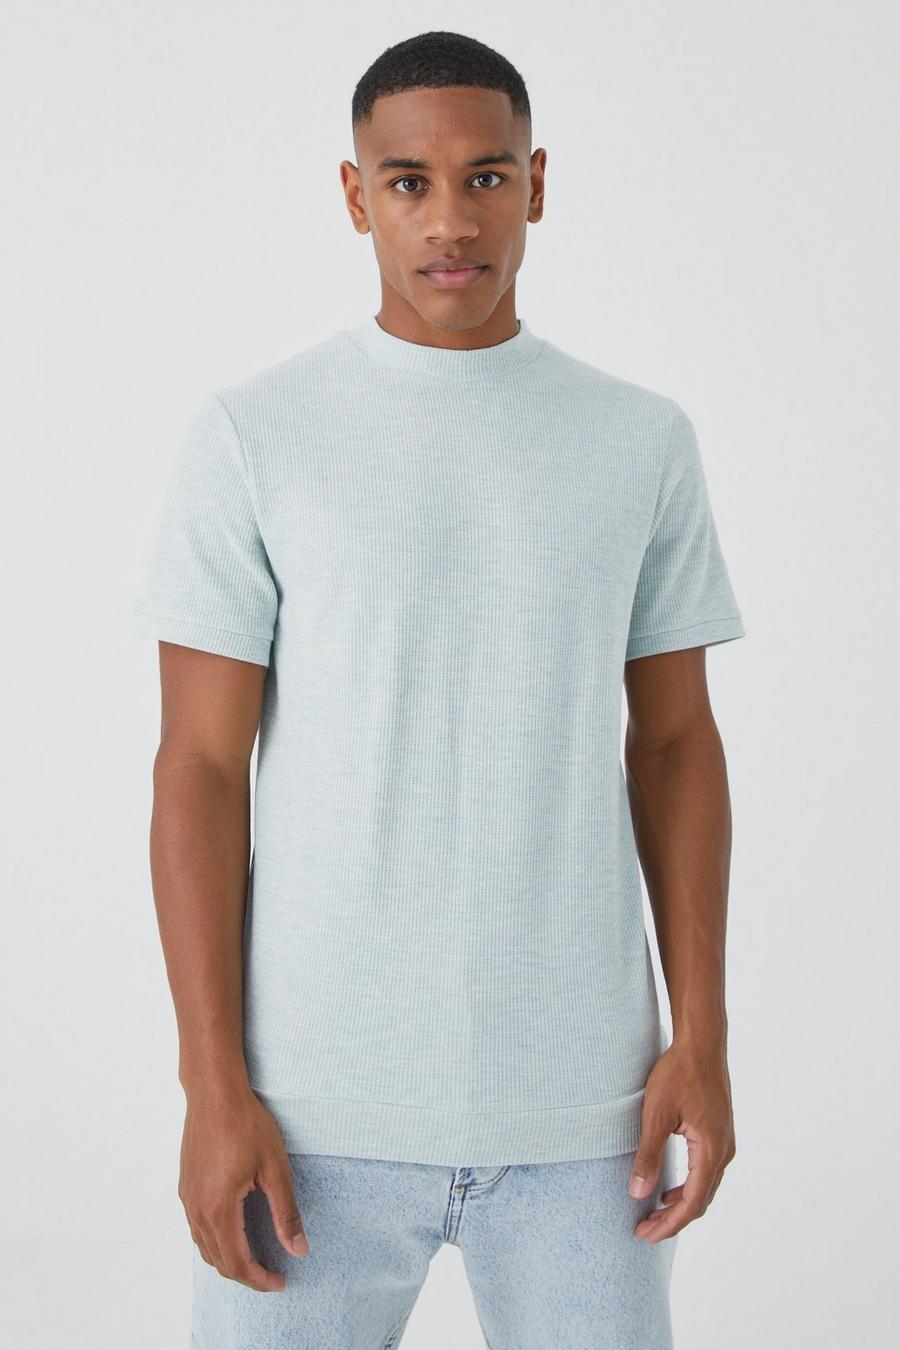 Camiseta jaspeada de tela gofre, Sage image number 1